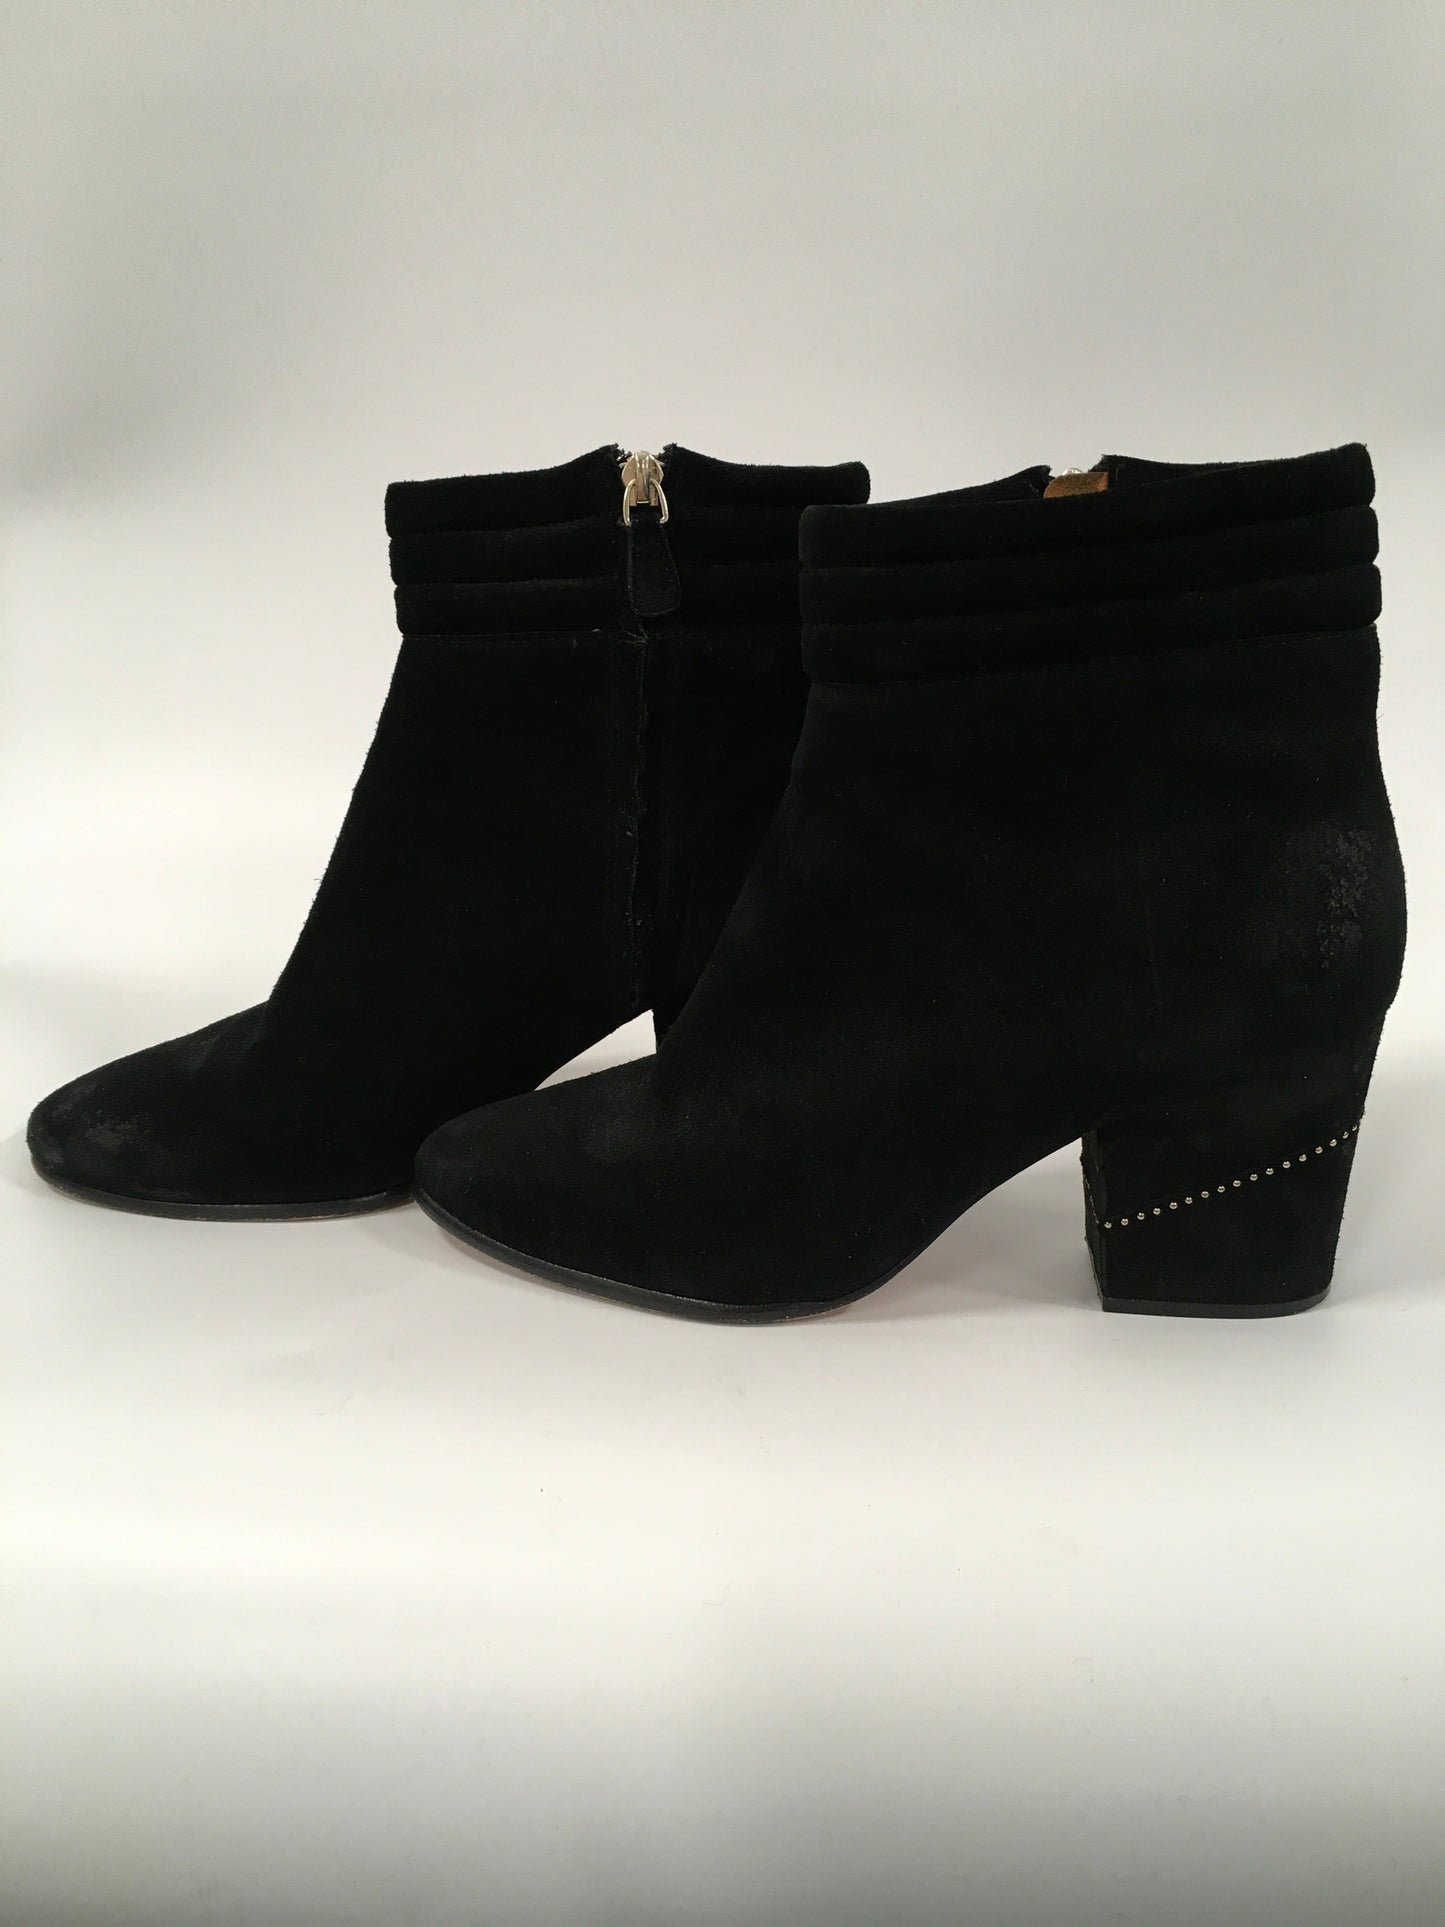 Black Boots Ankle Heels Rebecca Minkoff, Size 9